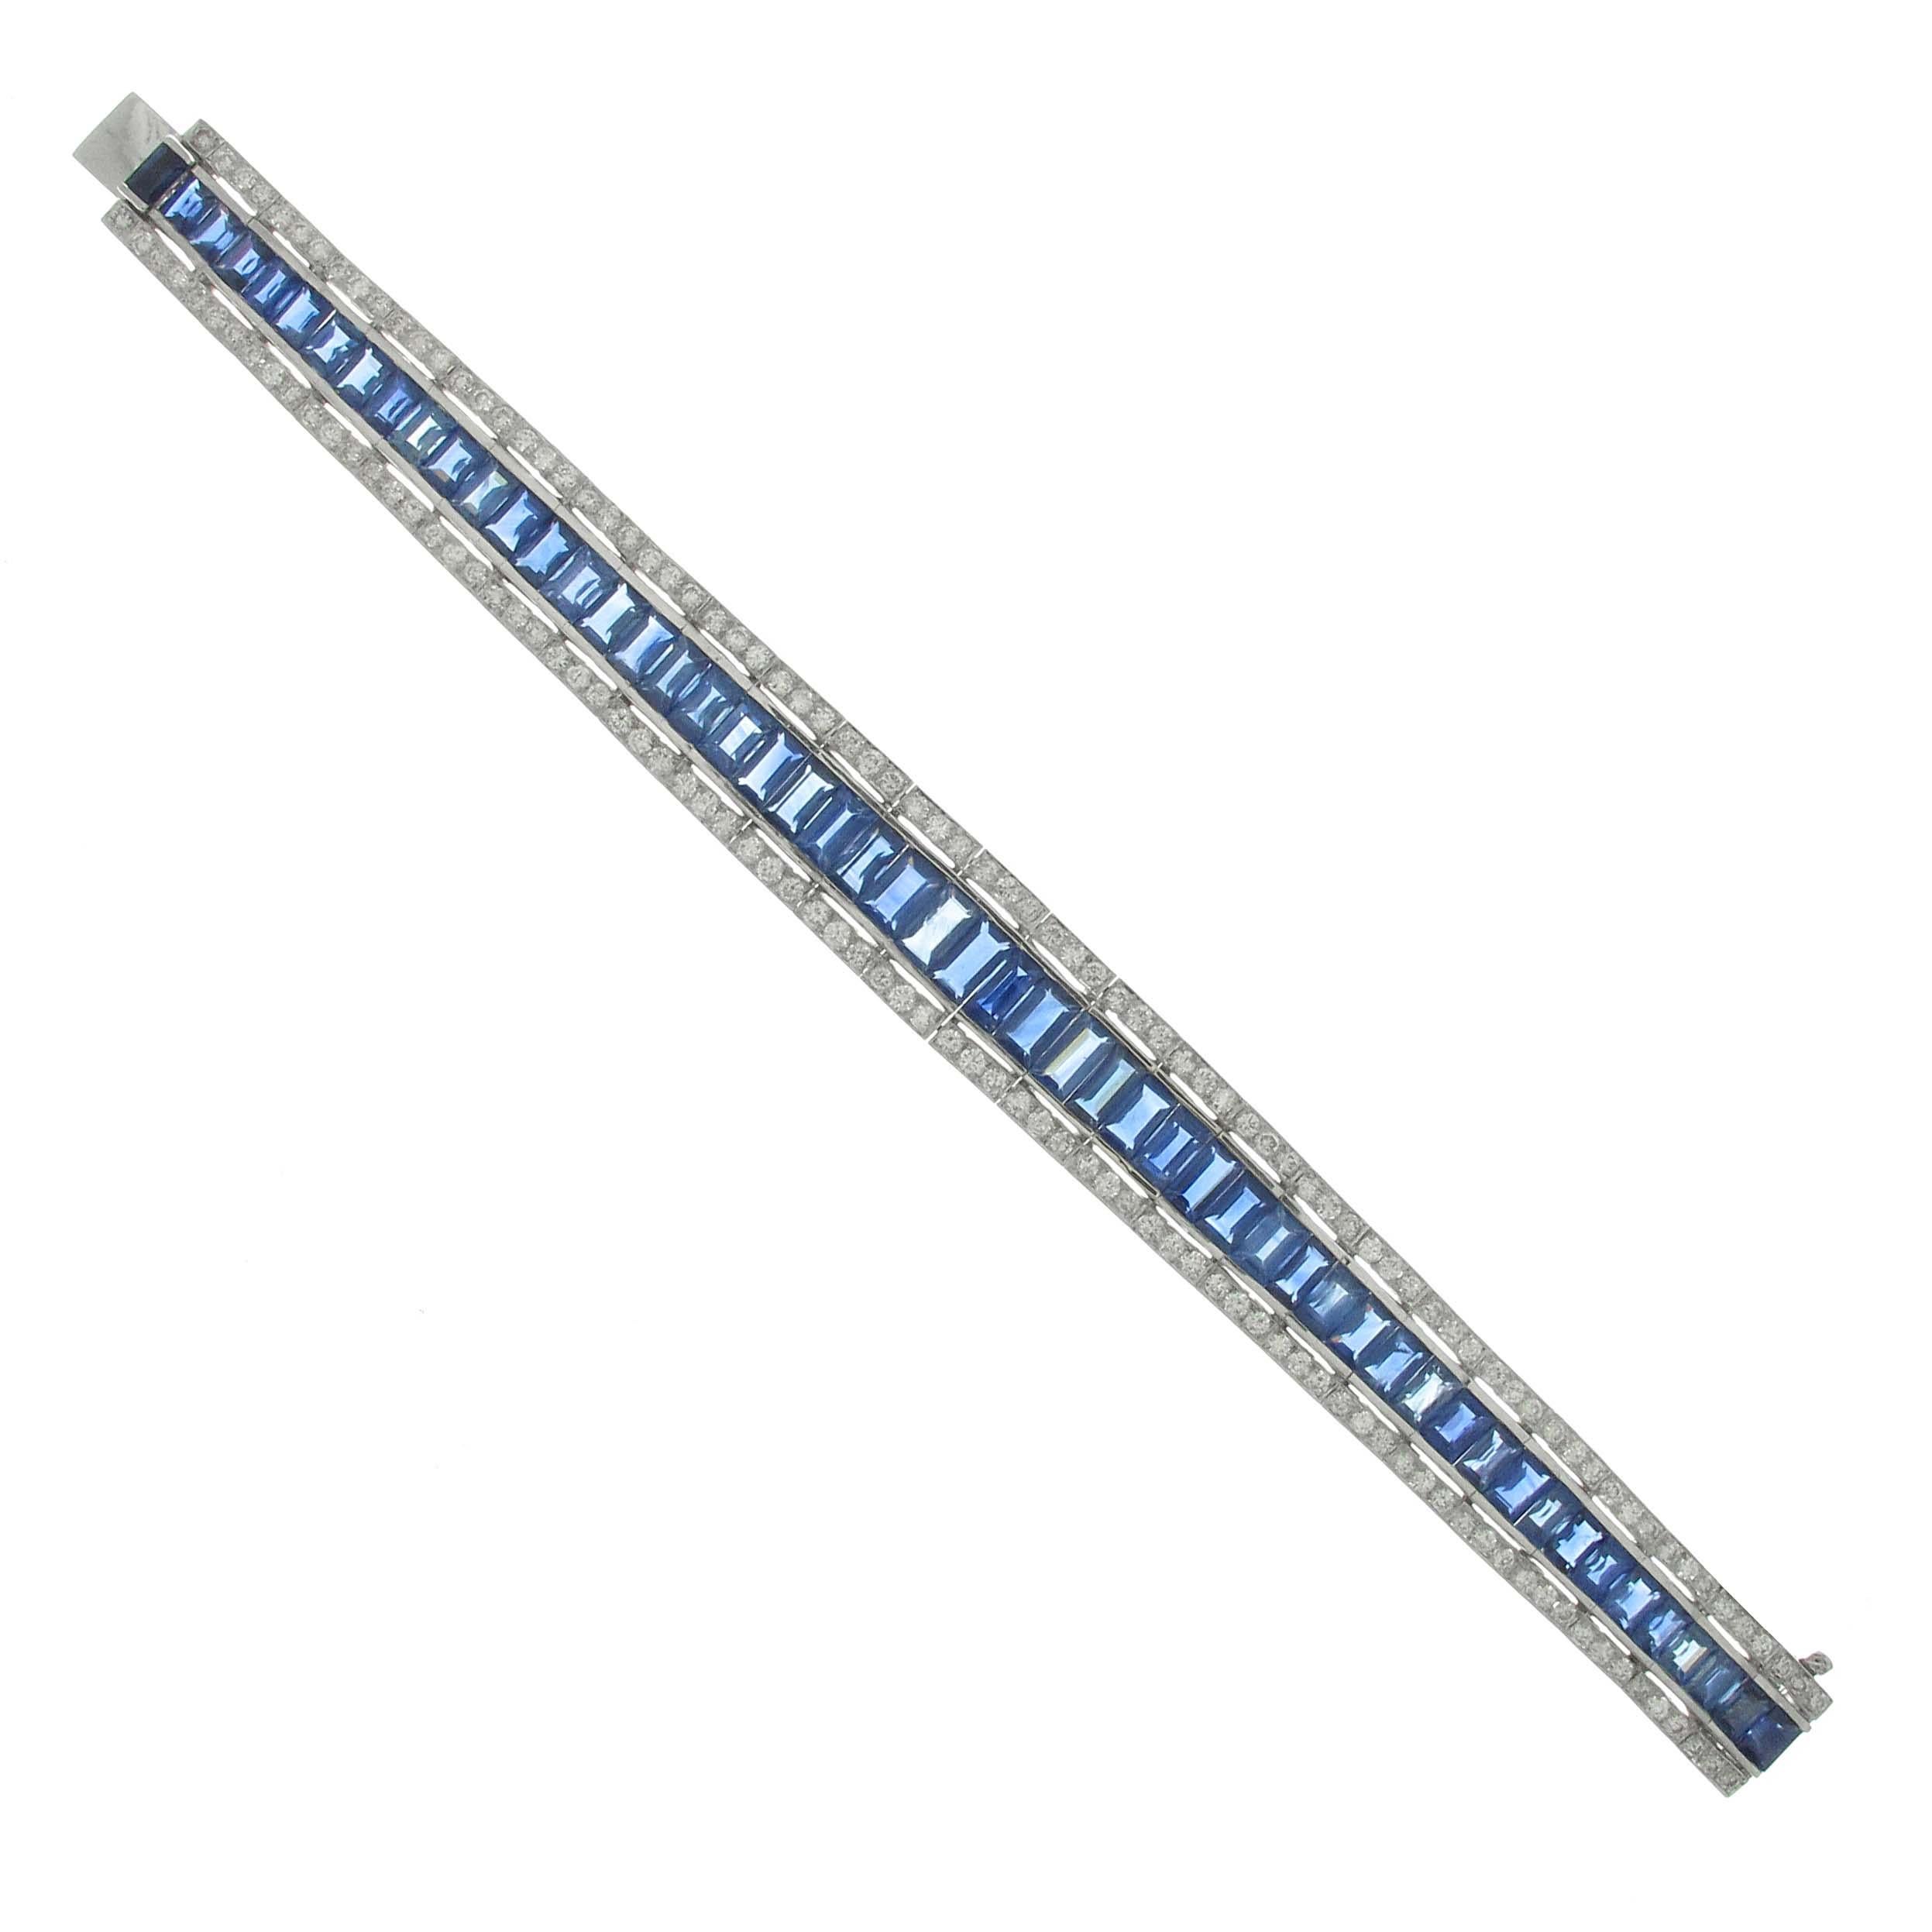 30 Carat of Blue Sapphires with 4 Carat of Diamonds Bracelet Set in 18 Karat WG